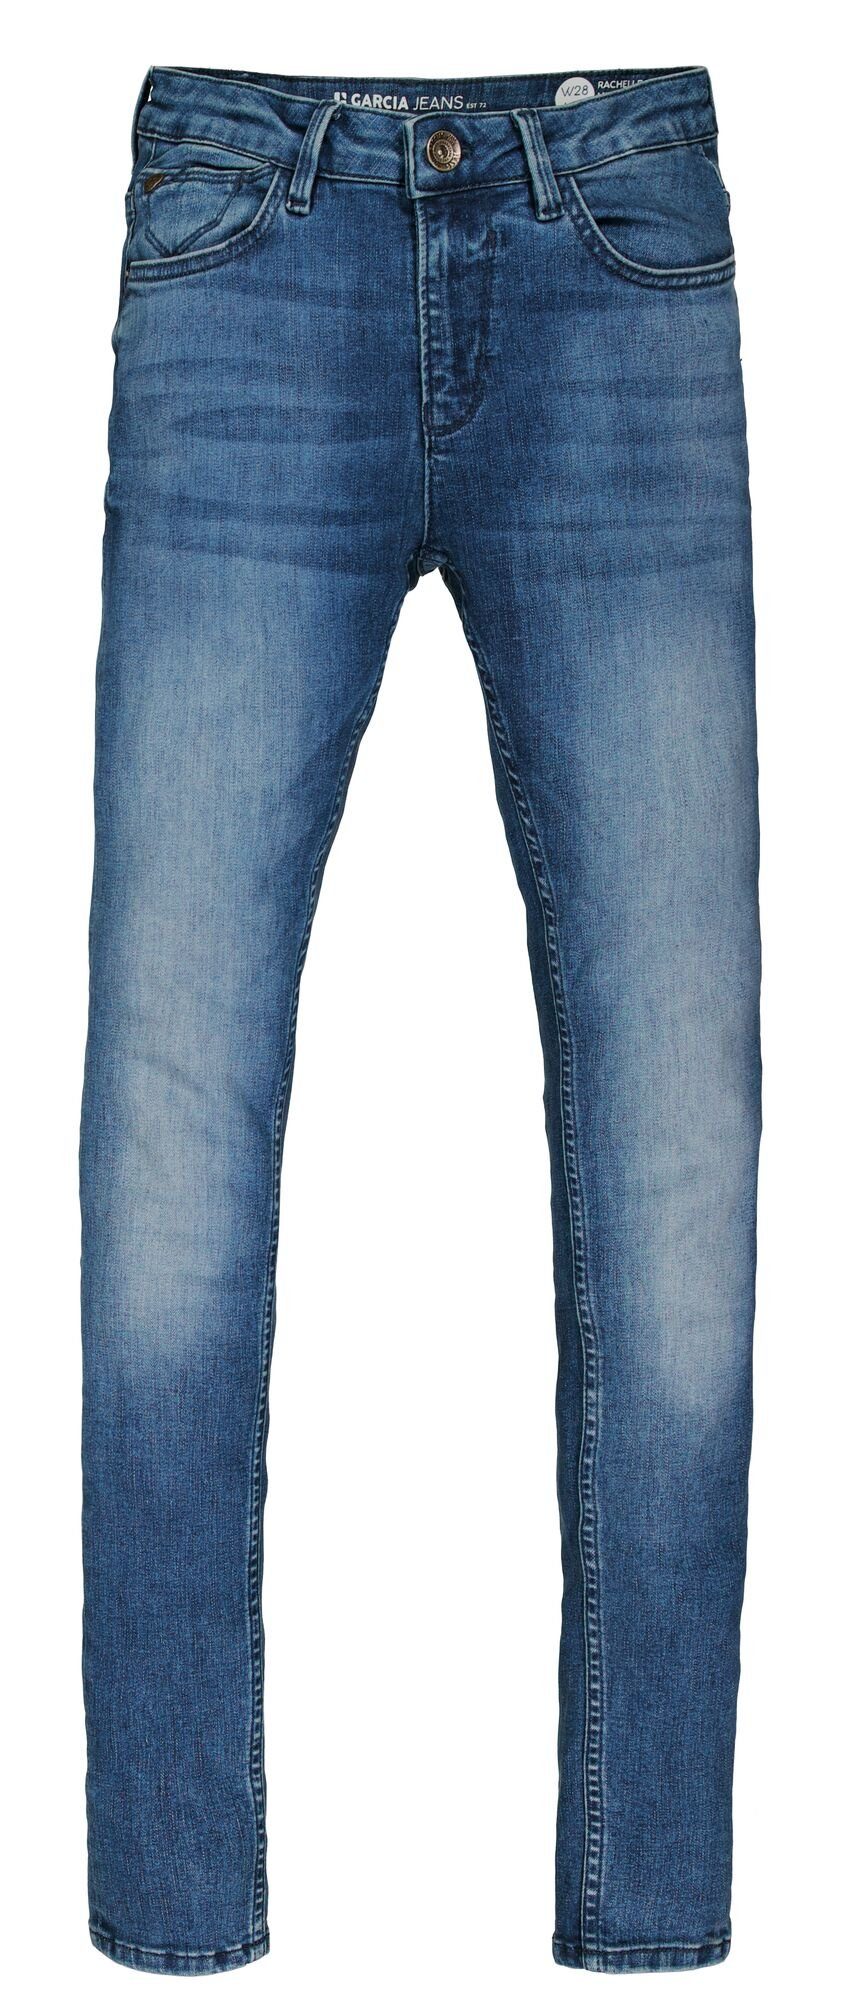 GARCIA JEANS Stretch-Jeans blue used Flow RACHELLE medium mid 279.8162 - Denim GARCIA